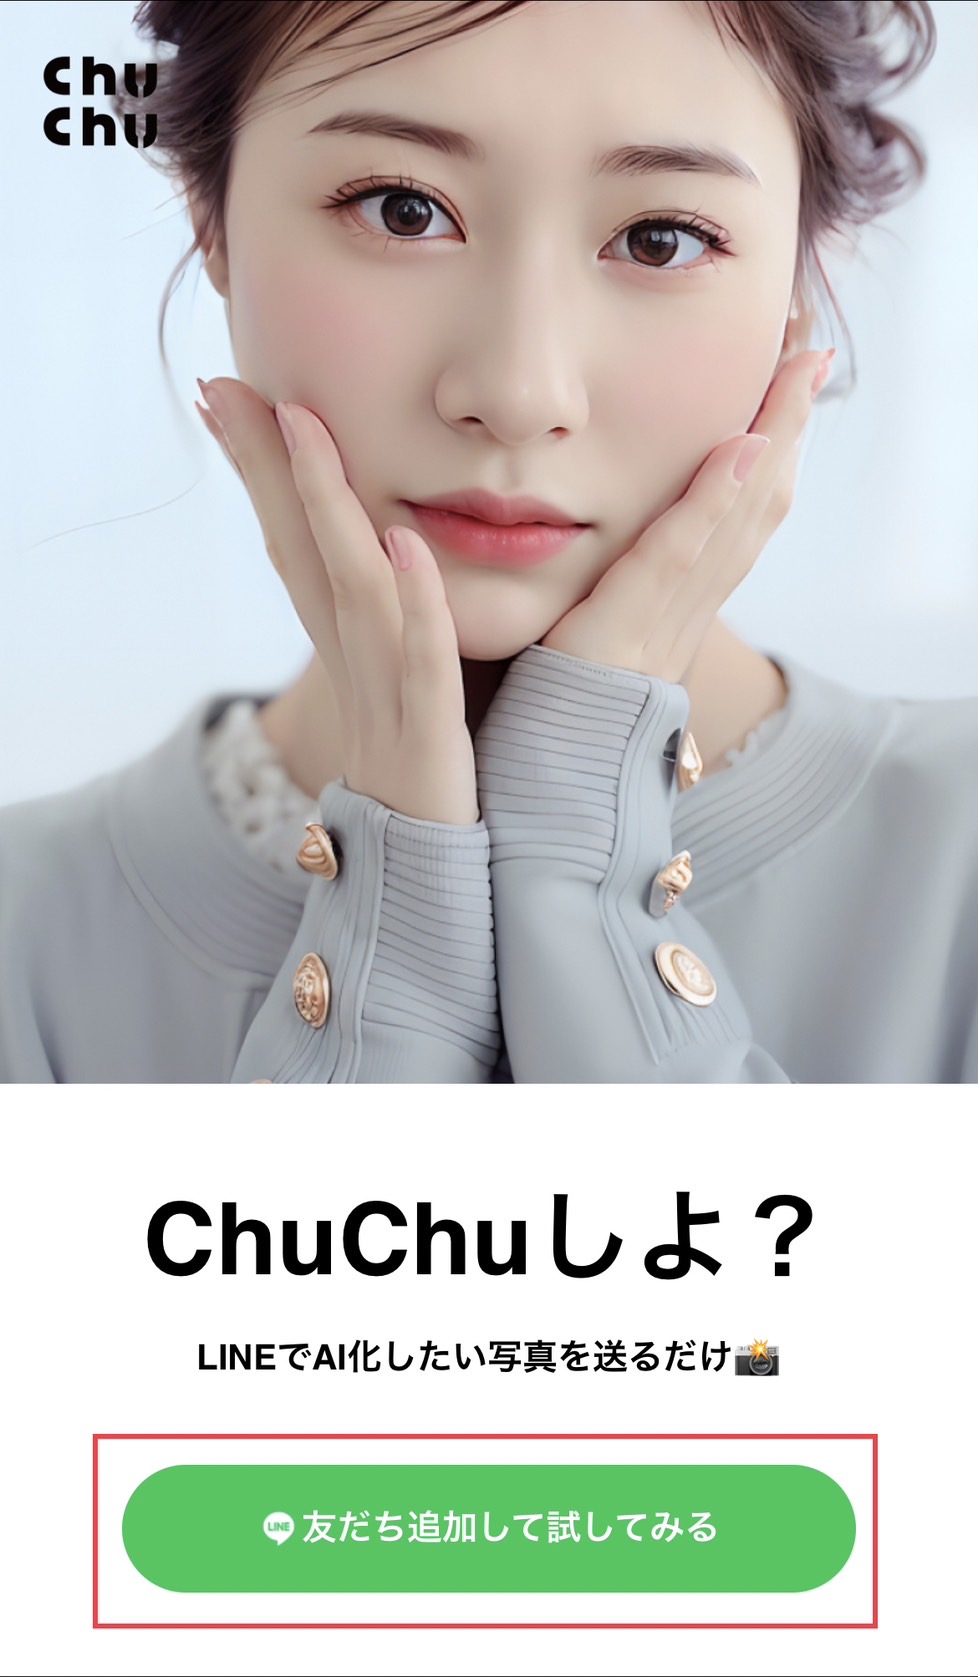 chuchu_app_1